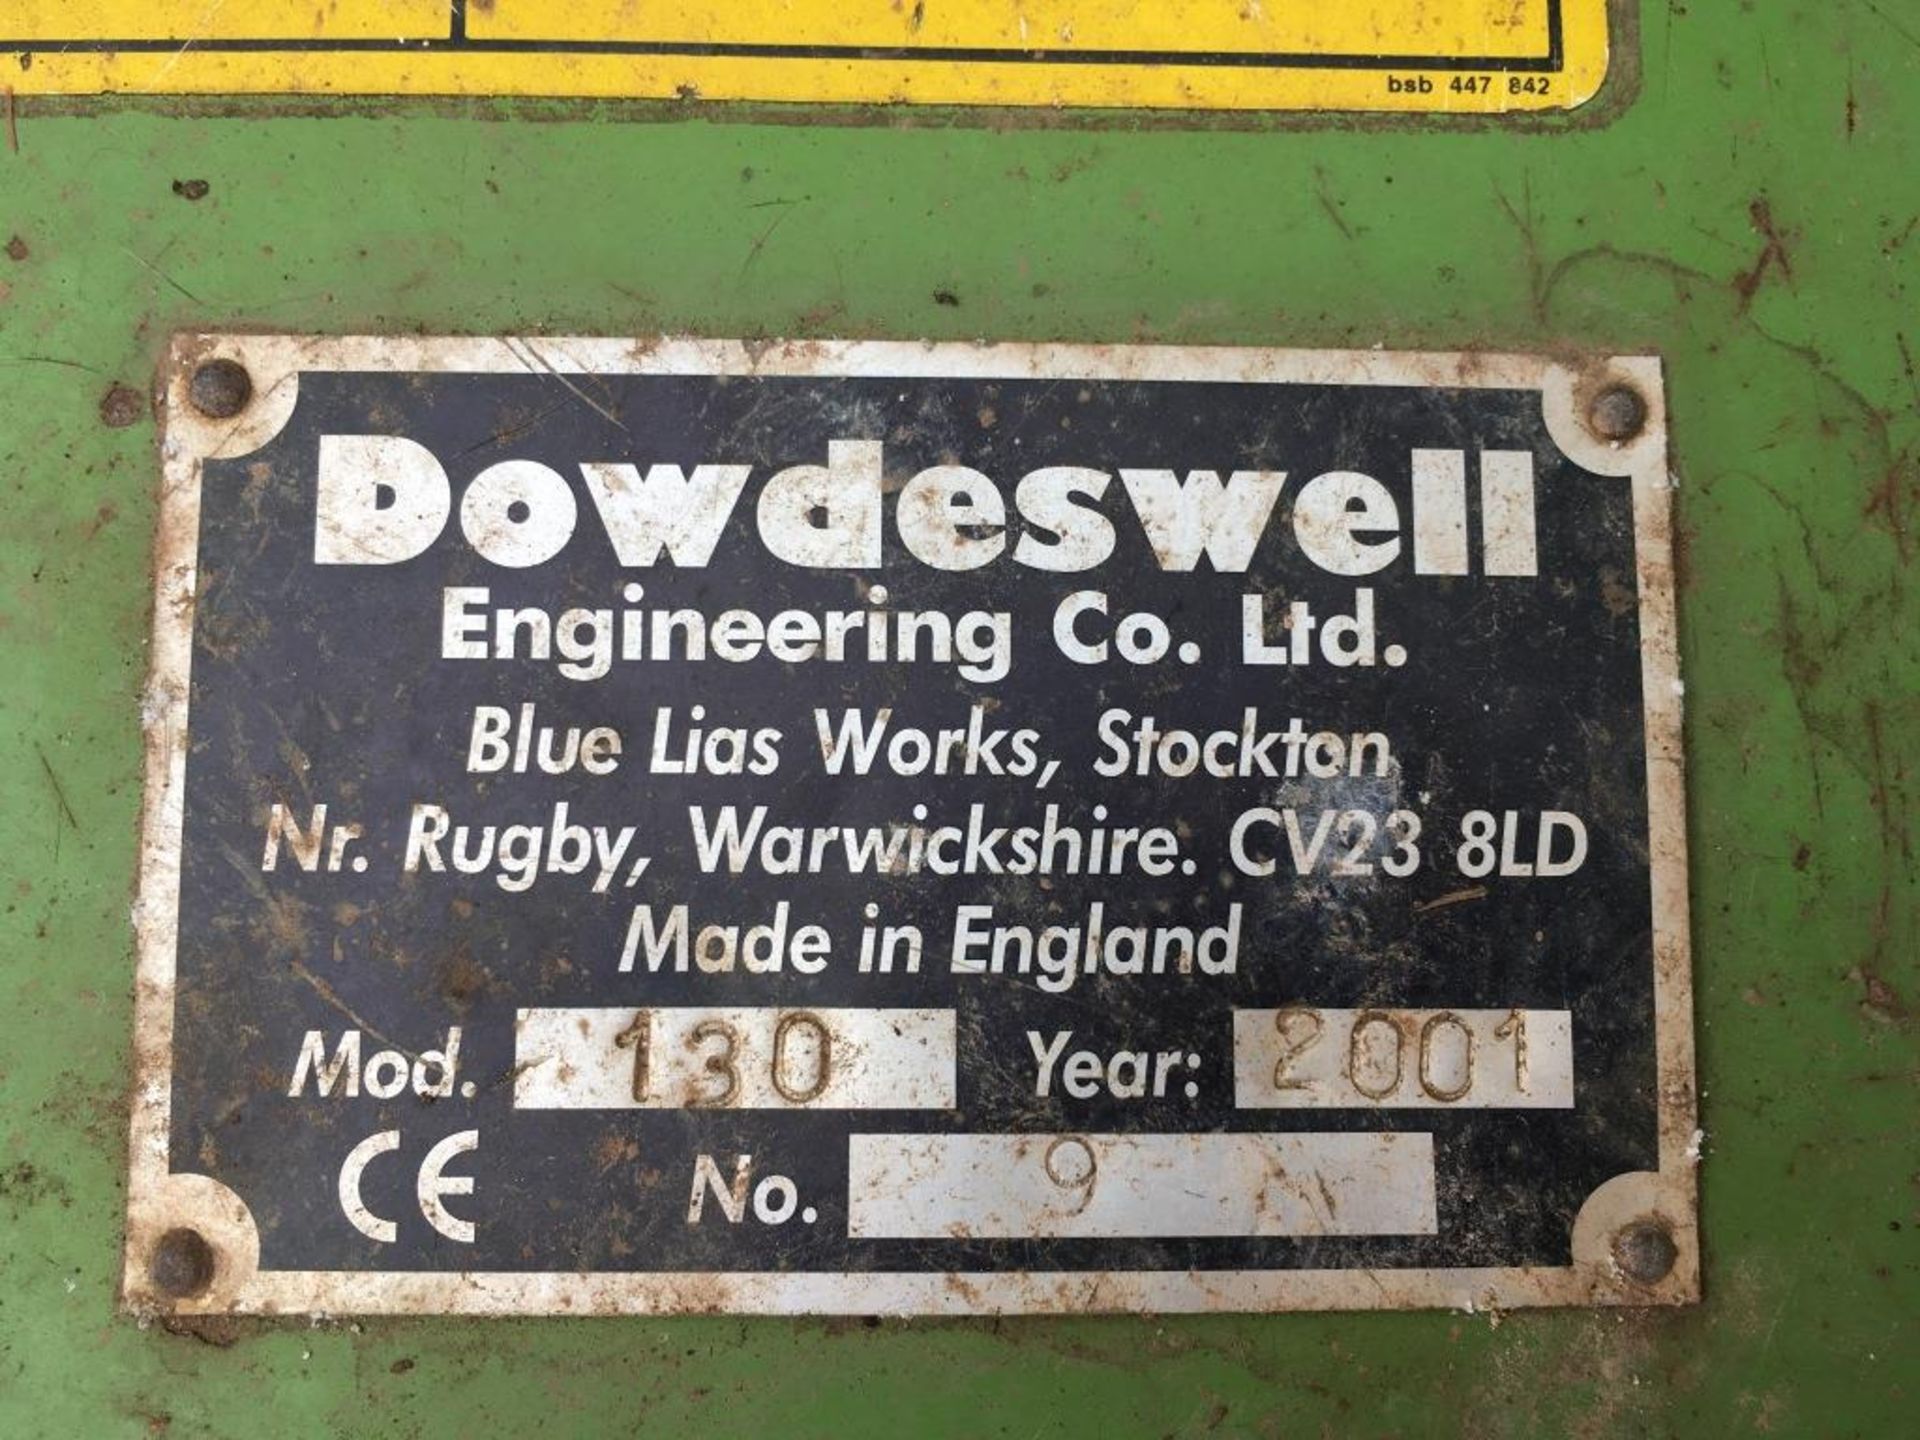 Dowdeswell Powavator 130 rotivator no. 9 (2001) (incomplete) - Image 5 of 6